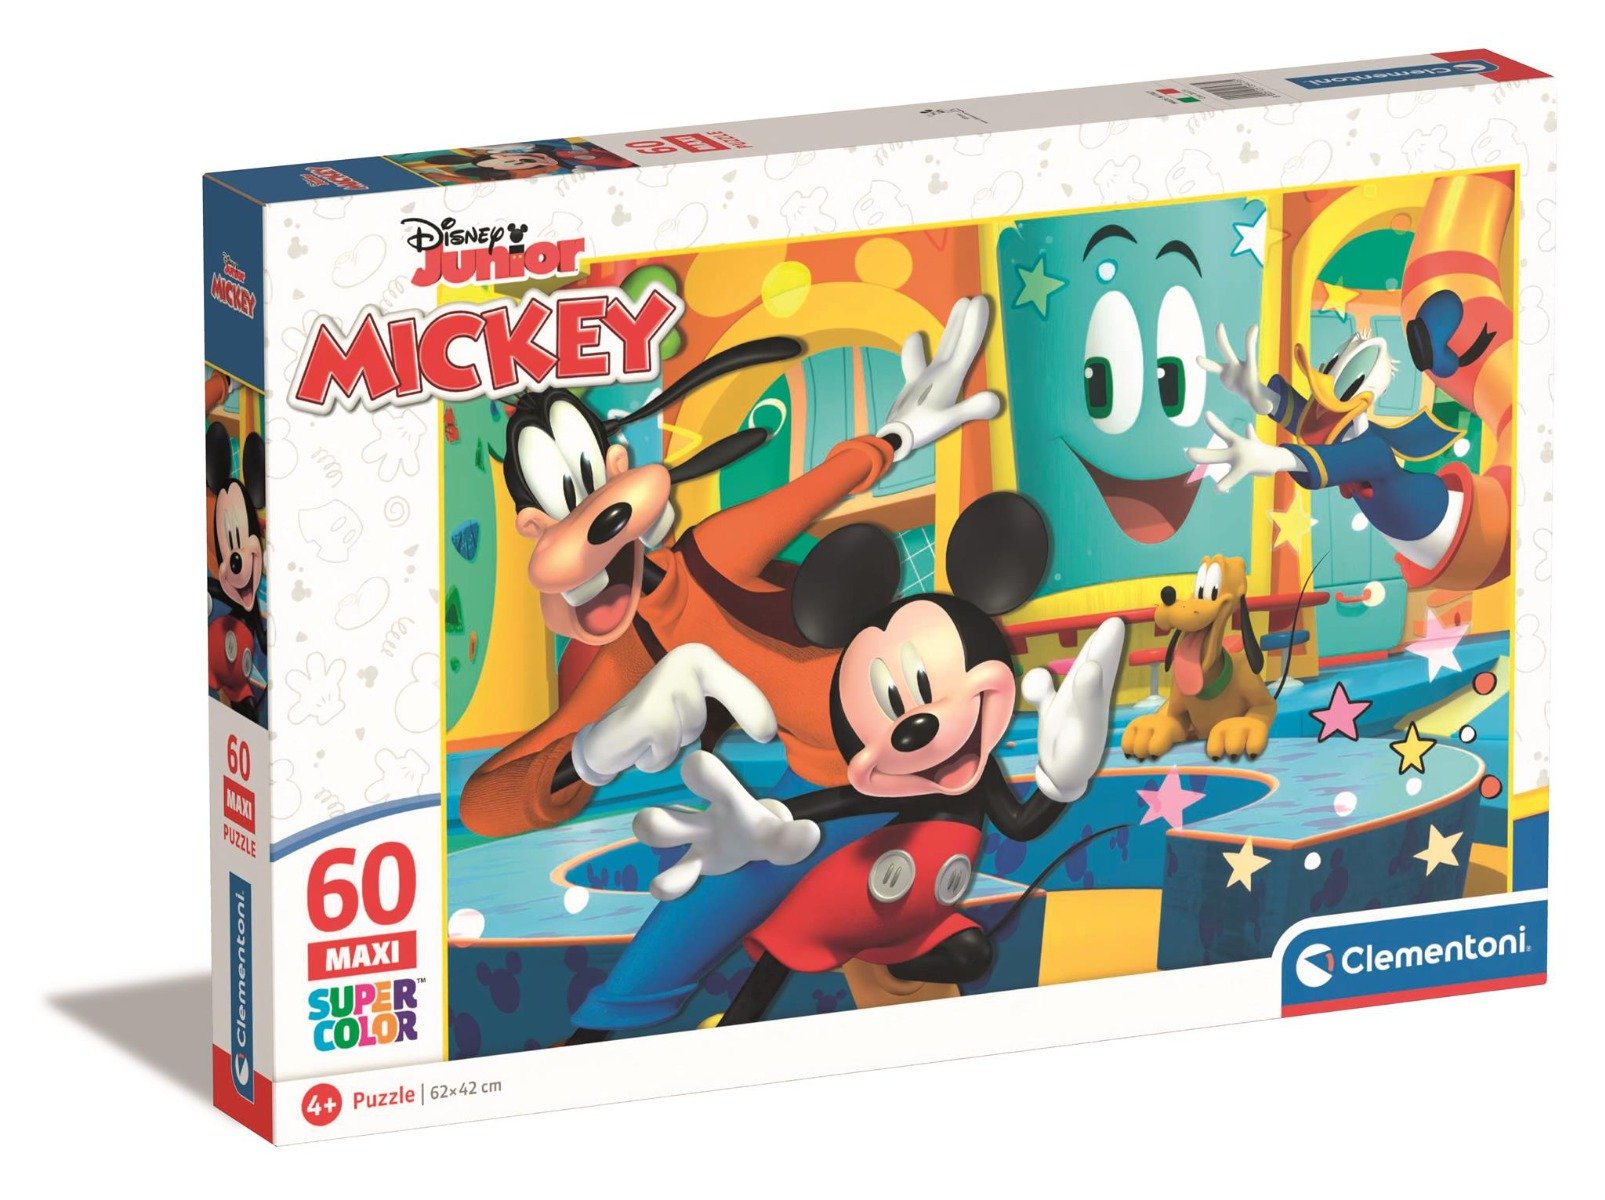 Puzzle Clementoni, Maxi, Disney Mickey Mouse, 60 piese Clementoni imagine 2022 protejamcopilaria.ro